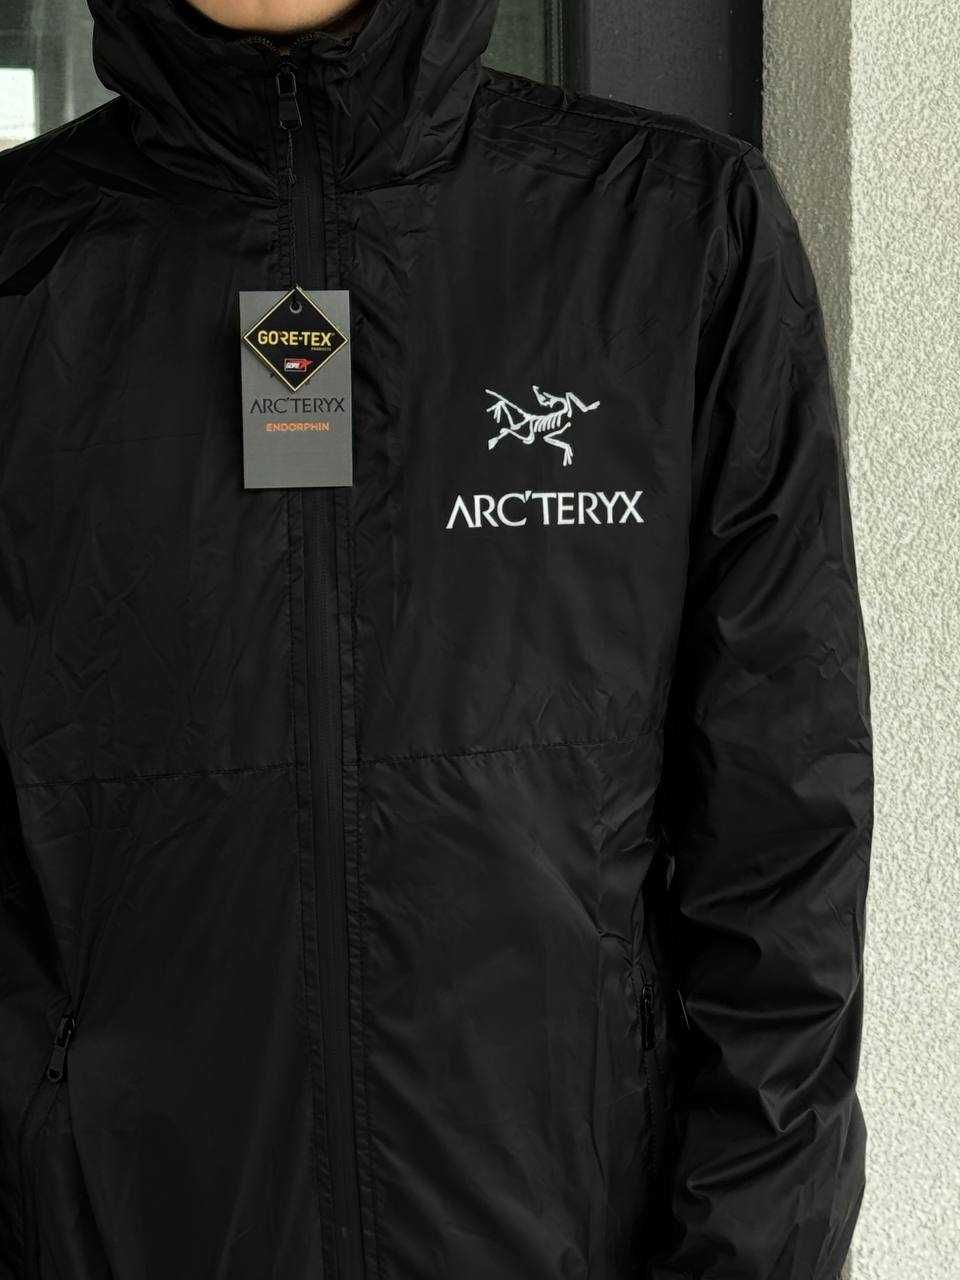 XS S M L XL // Arteryx мужская куртка ветровка артерікс